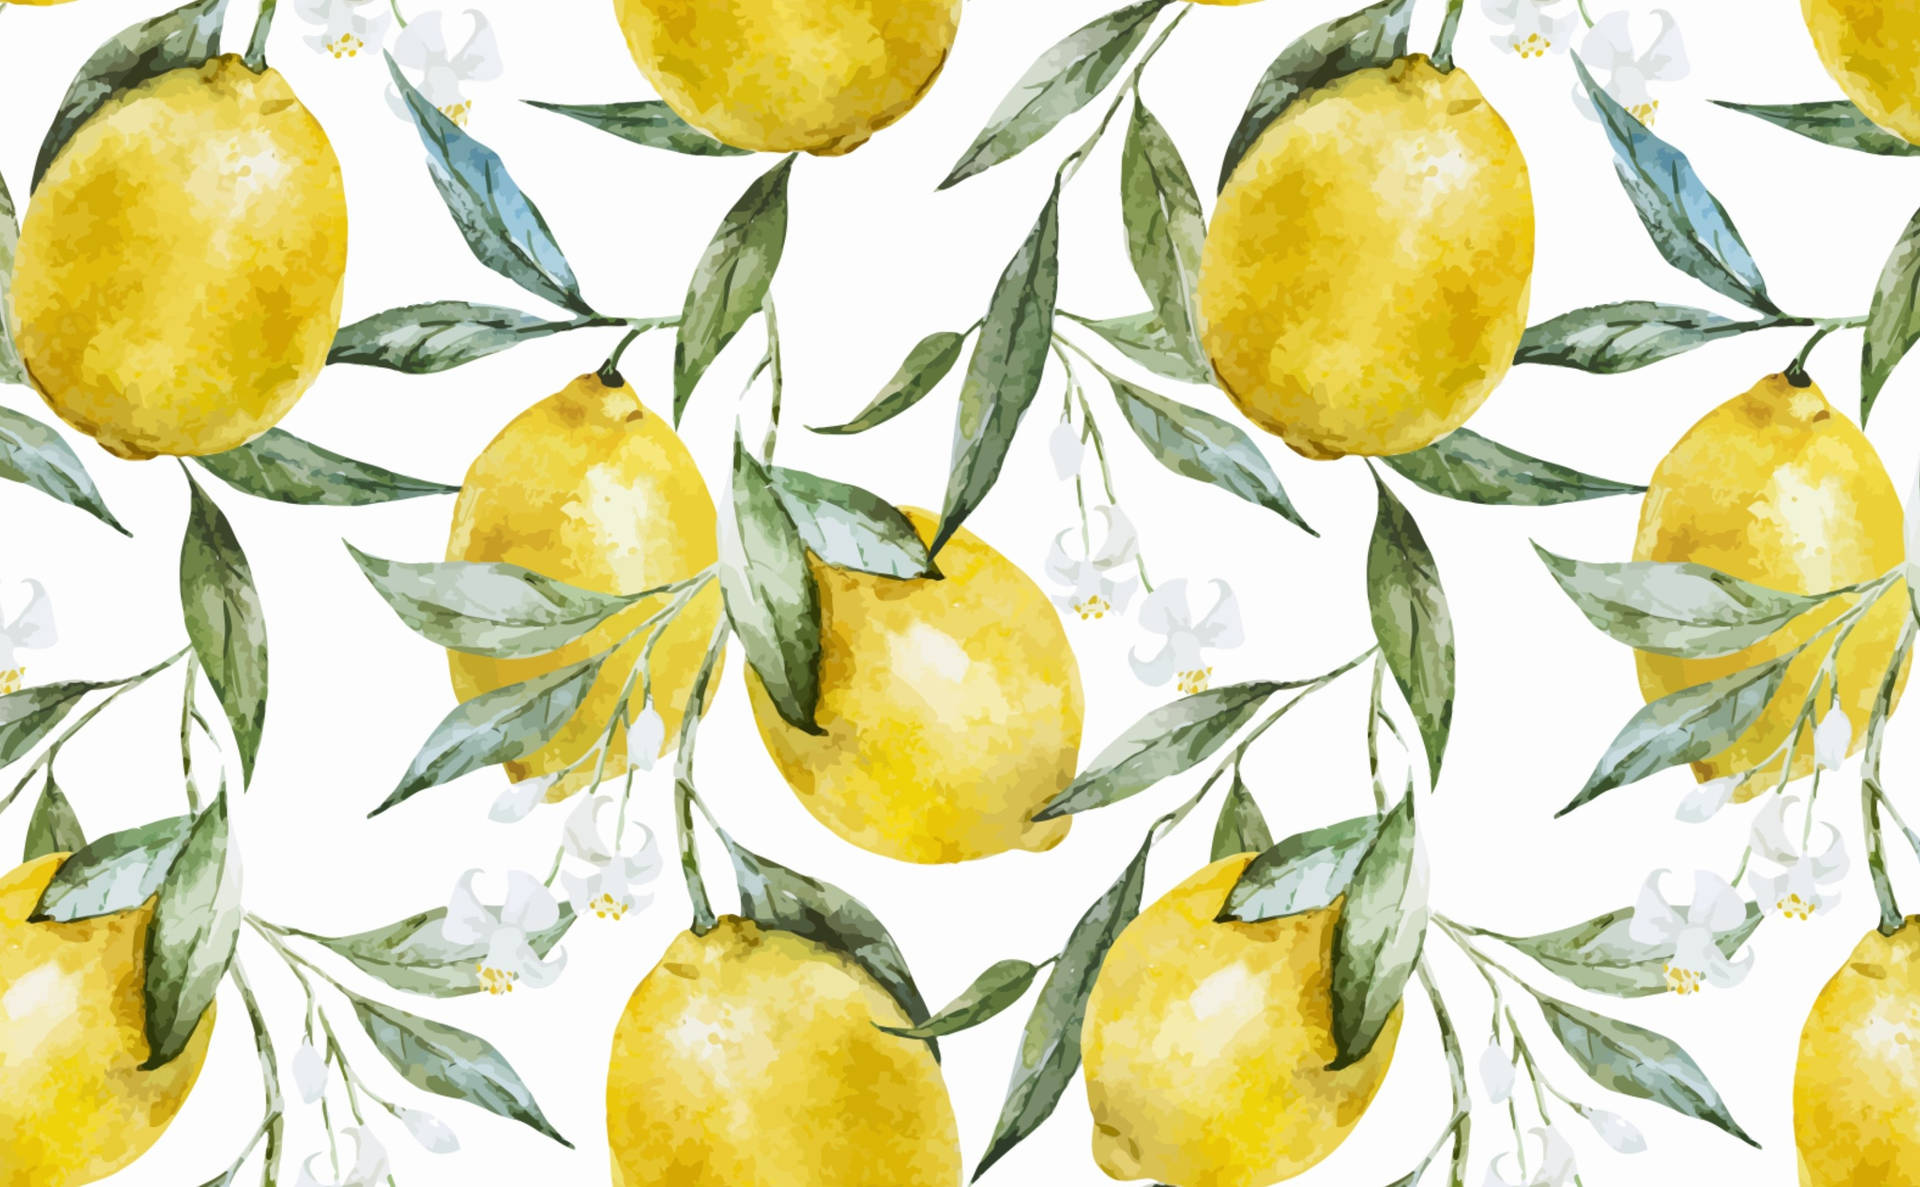 Lemon 3028X1872 Wallpaper and Background Image